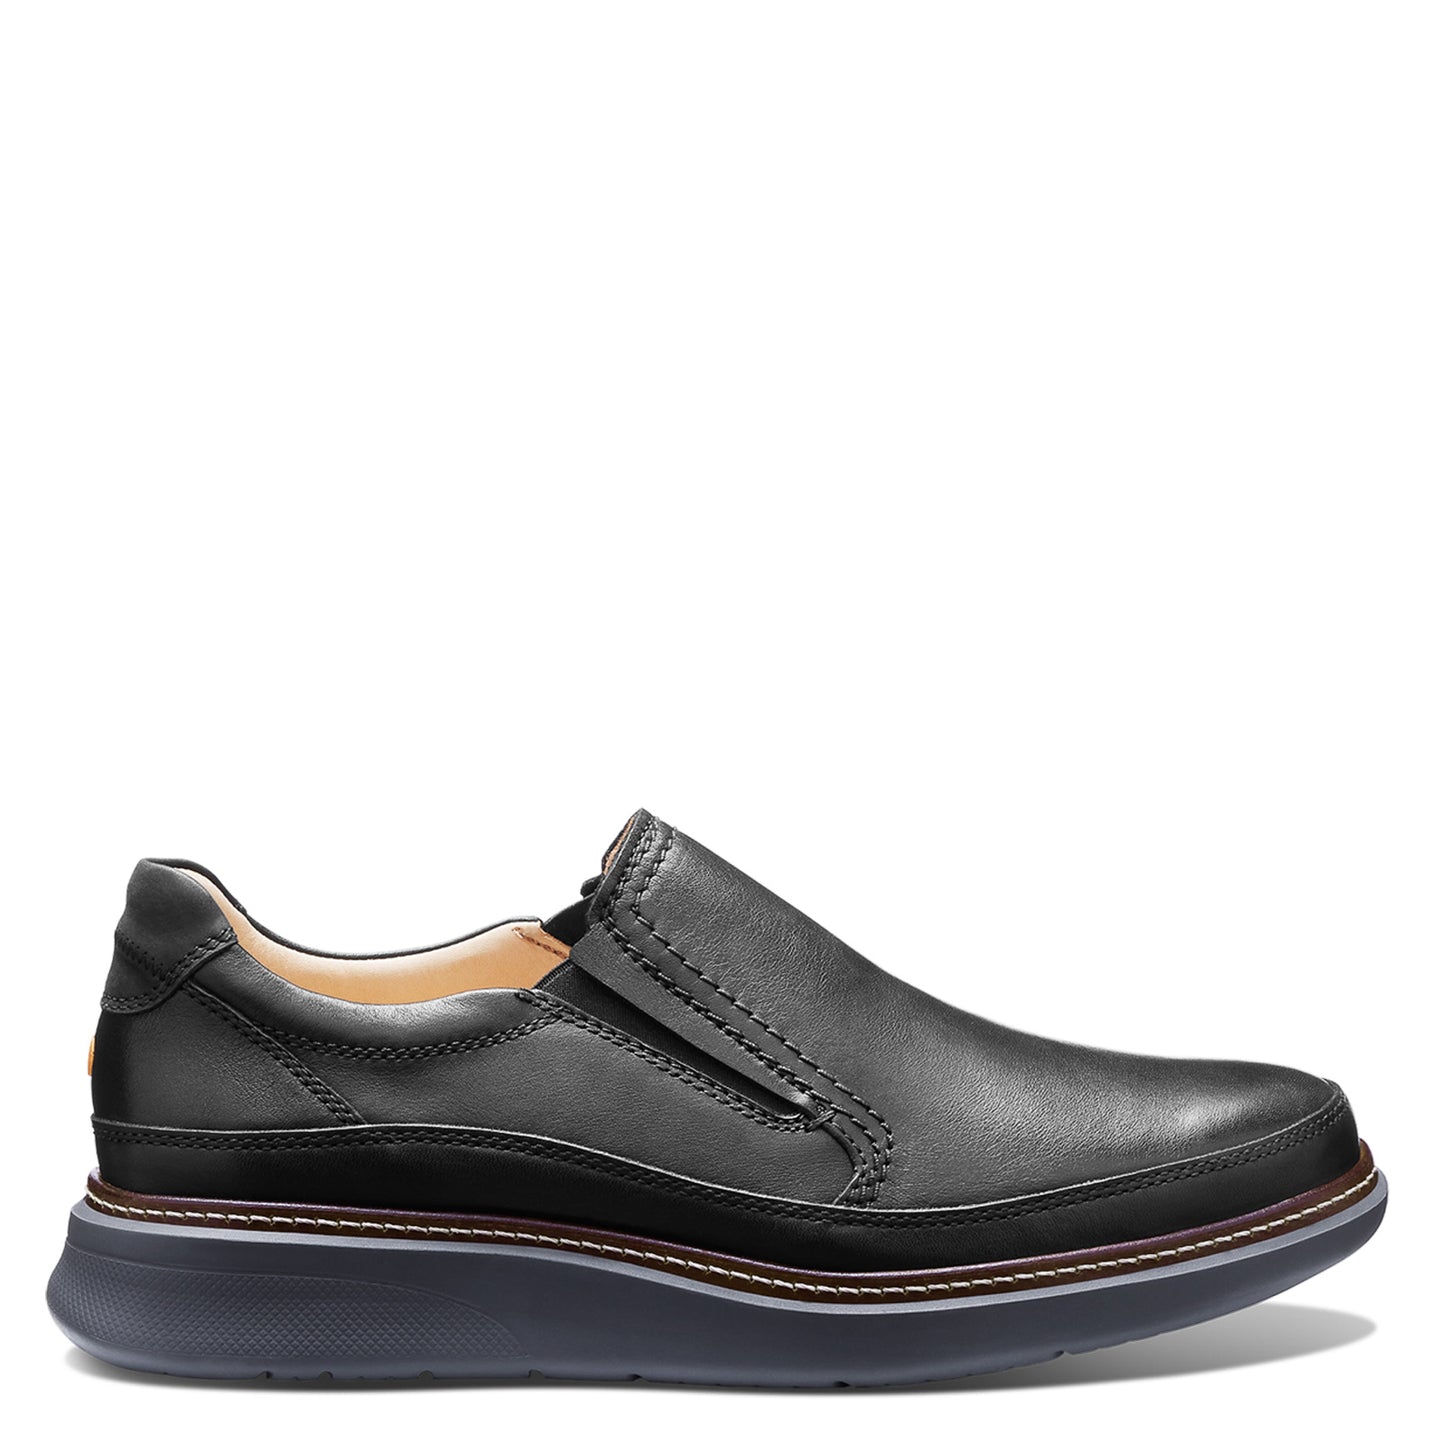 Peltz Shoes  Men's Samuel Hubbard Rafael Slip-On Black Leather M2166-048